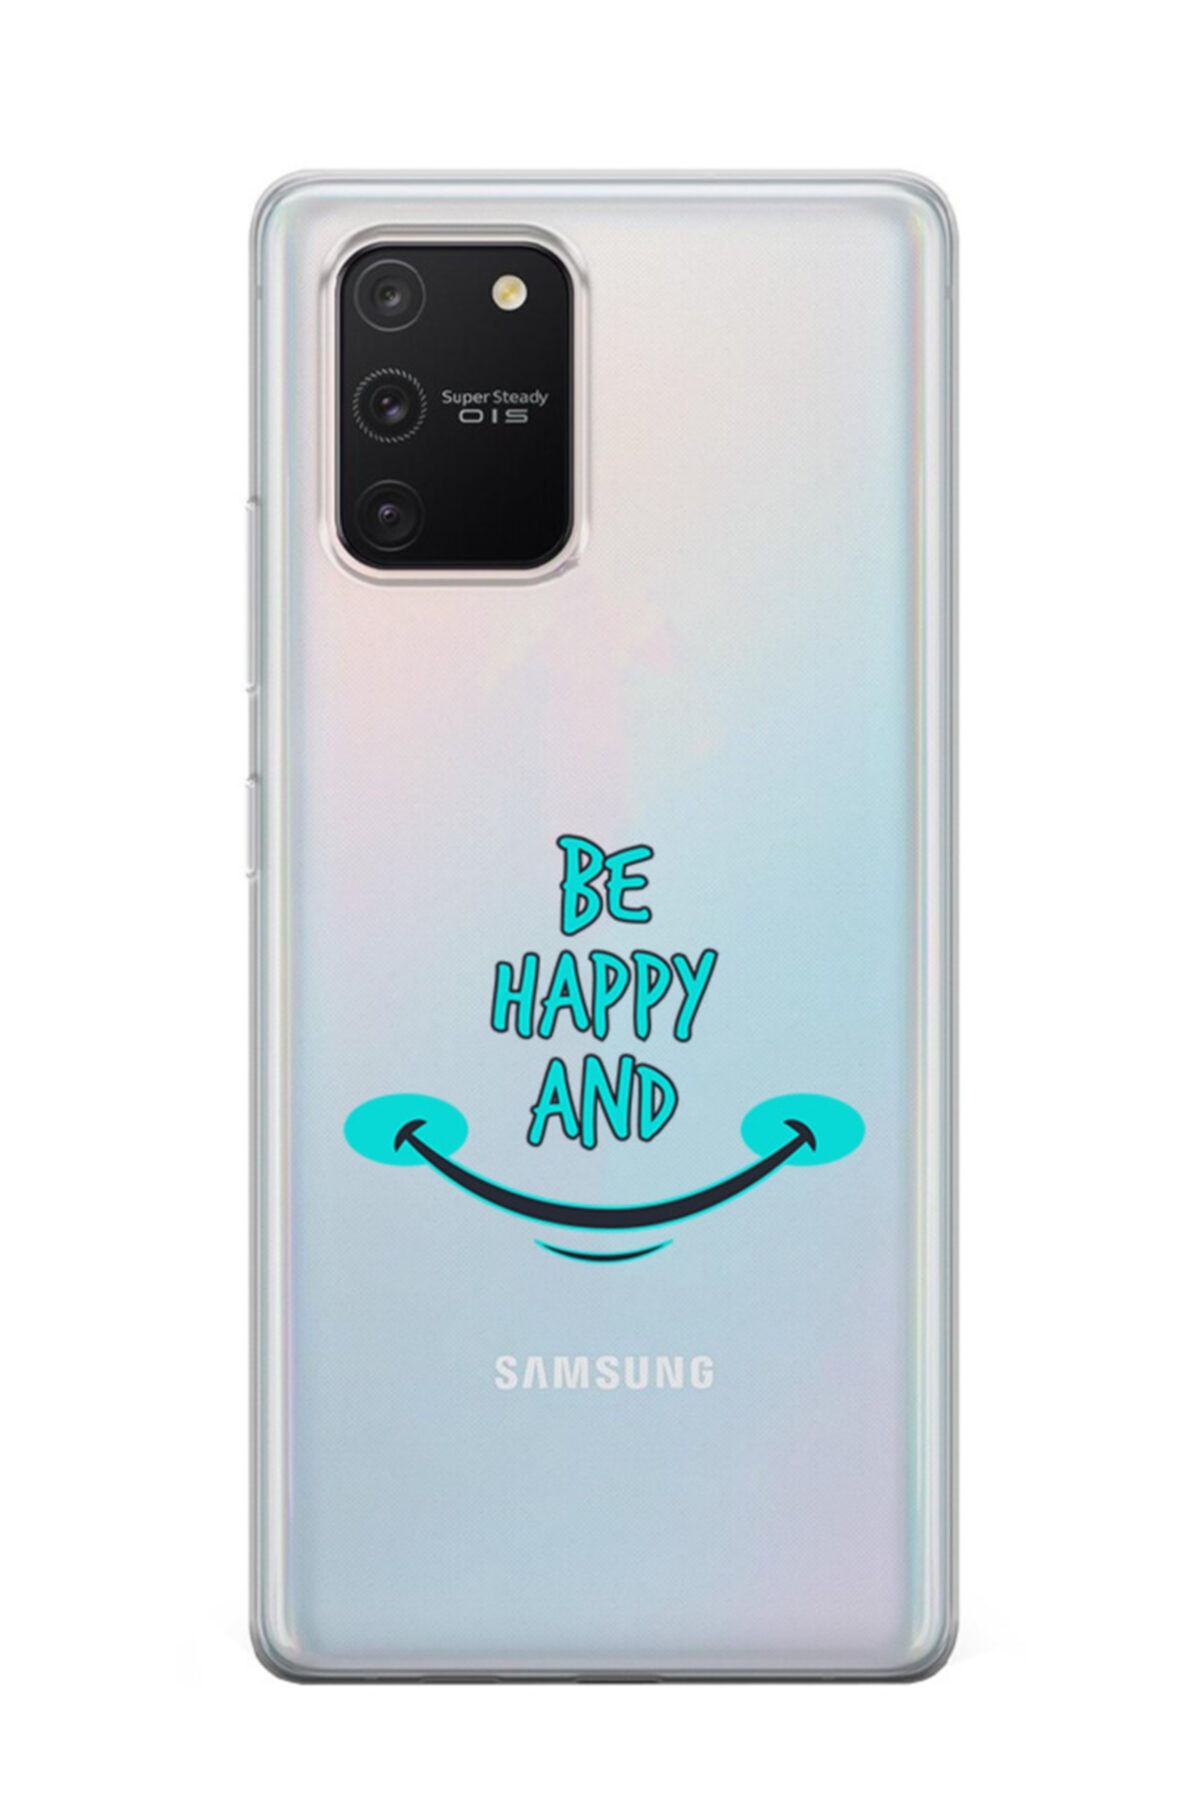 Dafhi Aksesuar Dafhi Samsung Galaxy S10 Lite Be Happy And Telefon Kılıfı